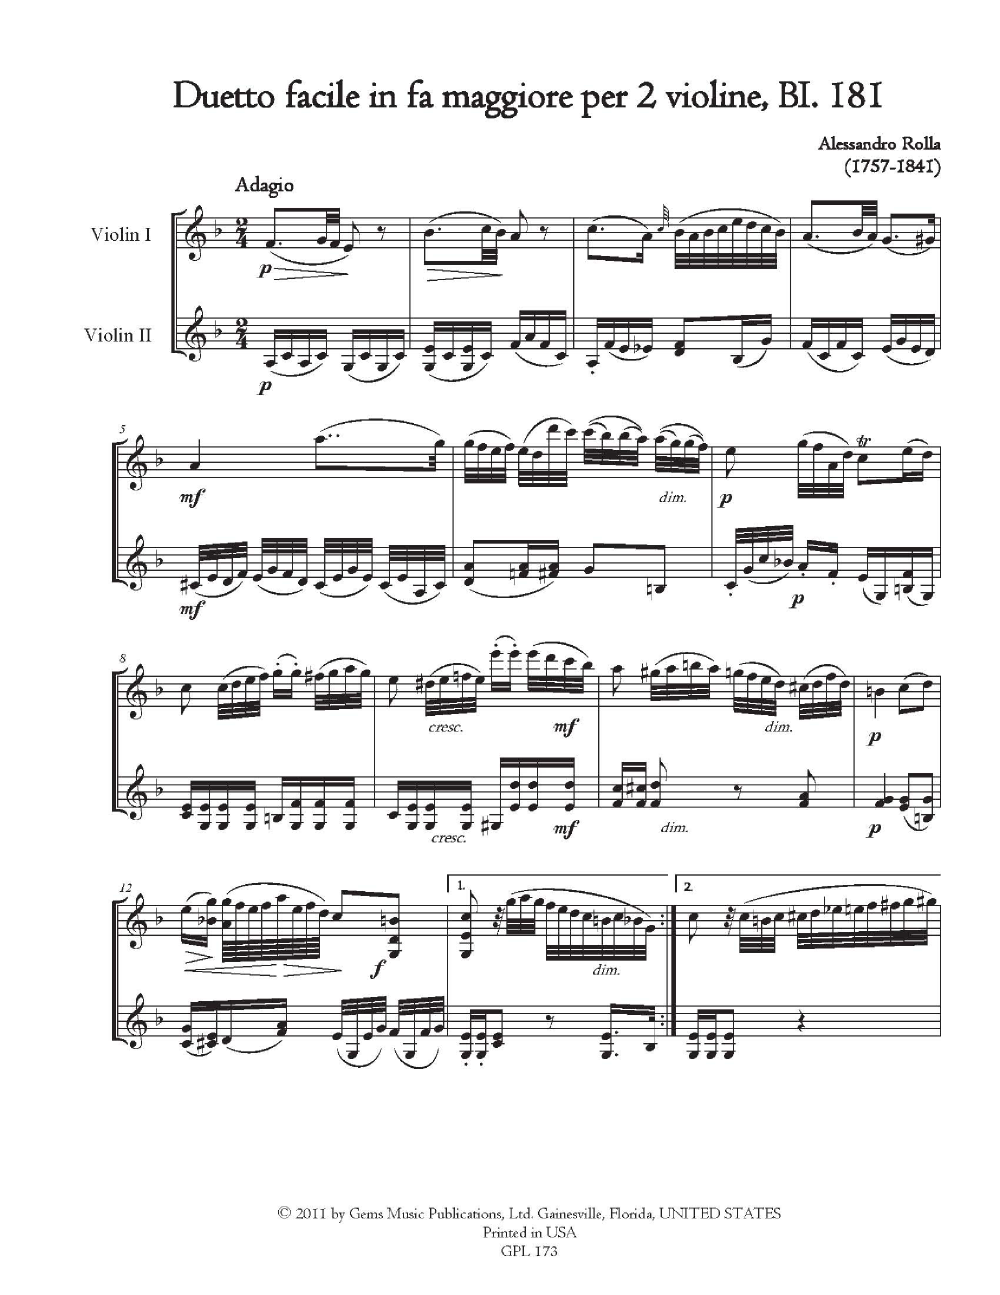 131 Violin Duets BI. 111-241 #18 (BI. 181-184)